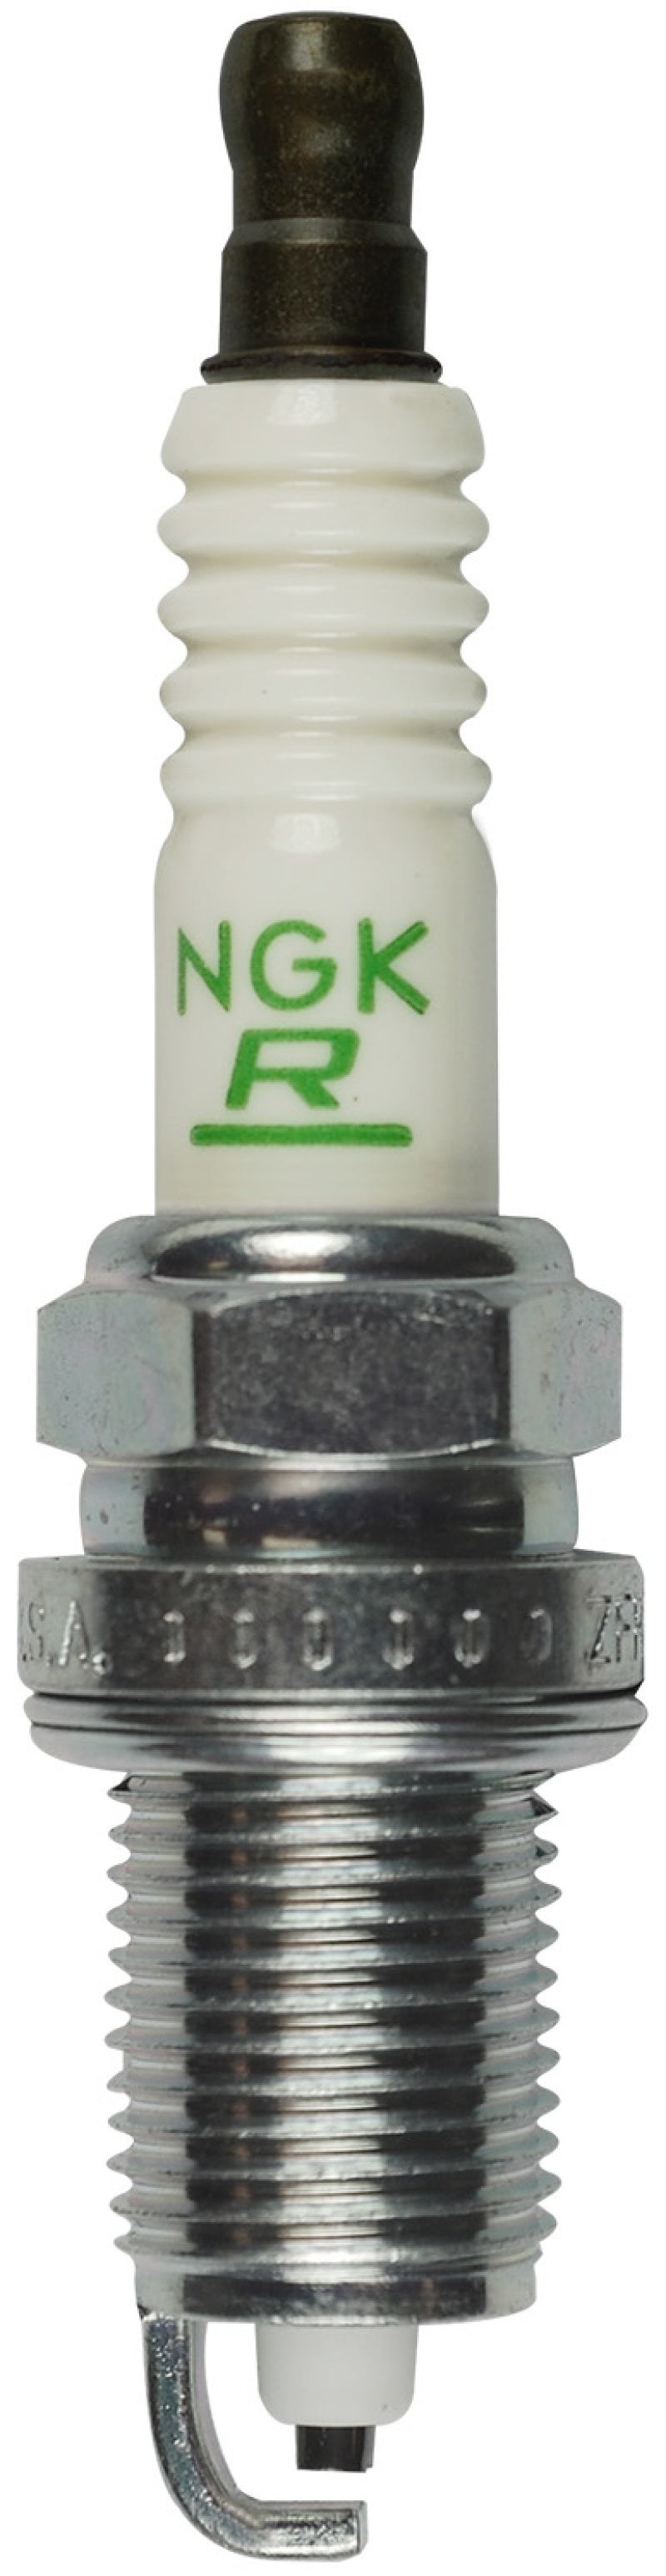 NGK V-Power Spark Plug Box of 4 (ZFR6F-11G)